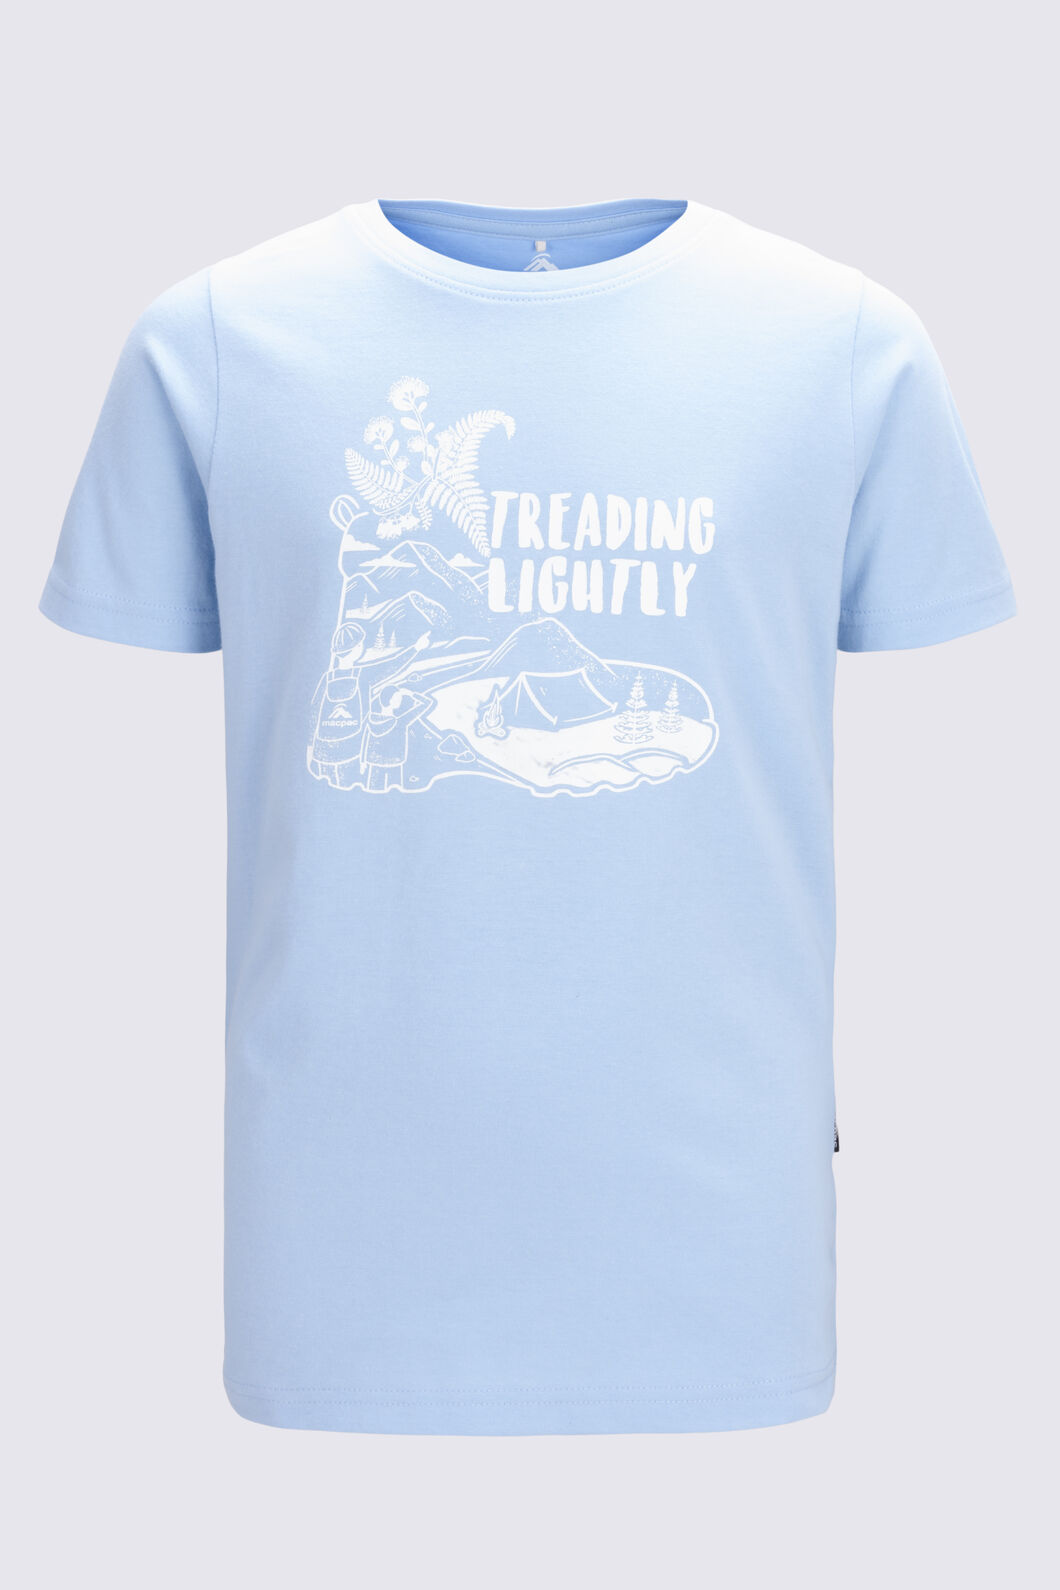 Macpac Kids' Tread Lightly T-Shirt, Chambray Blue, hi-res